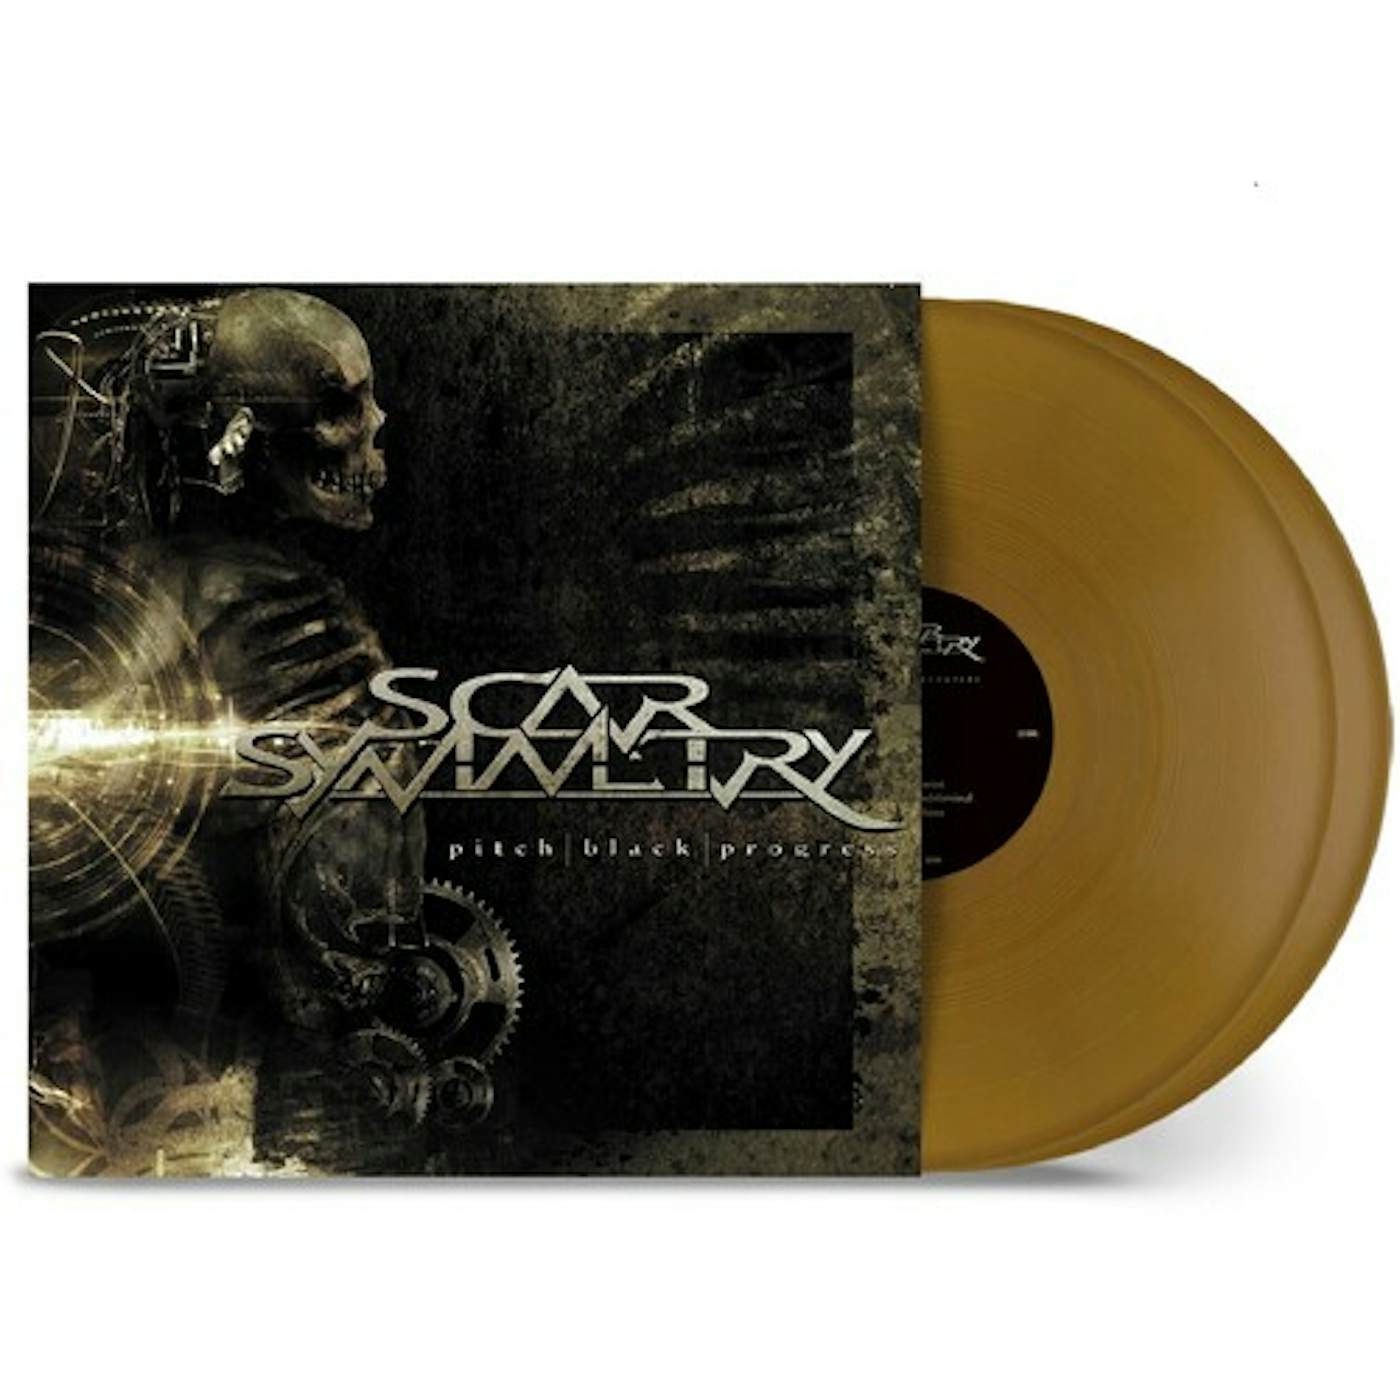 Scar Symmetry PITCH BLACK PROGRESS - GOLD Vinyl Record